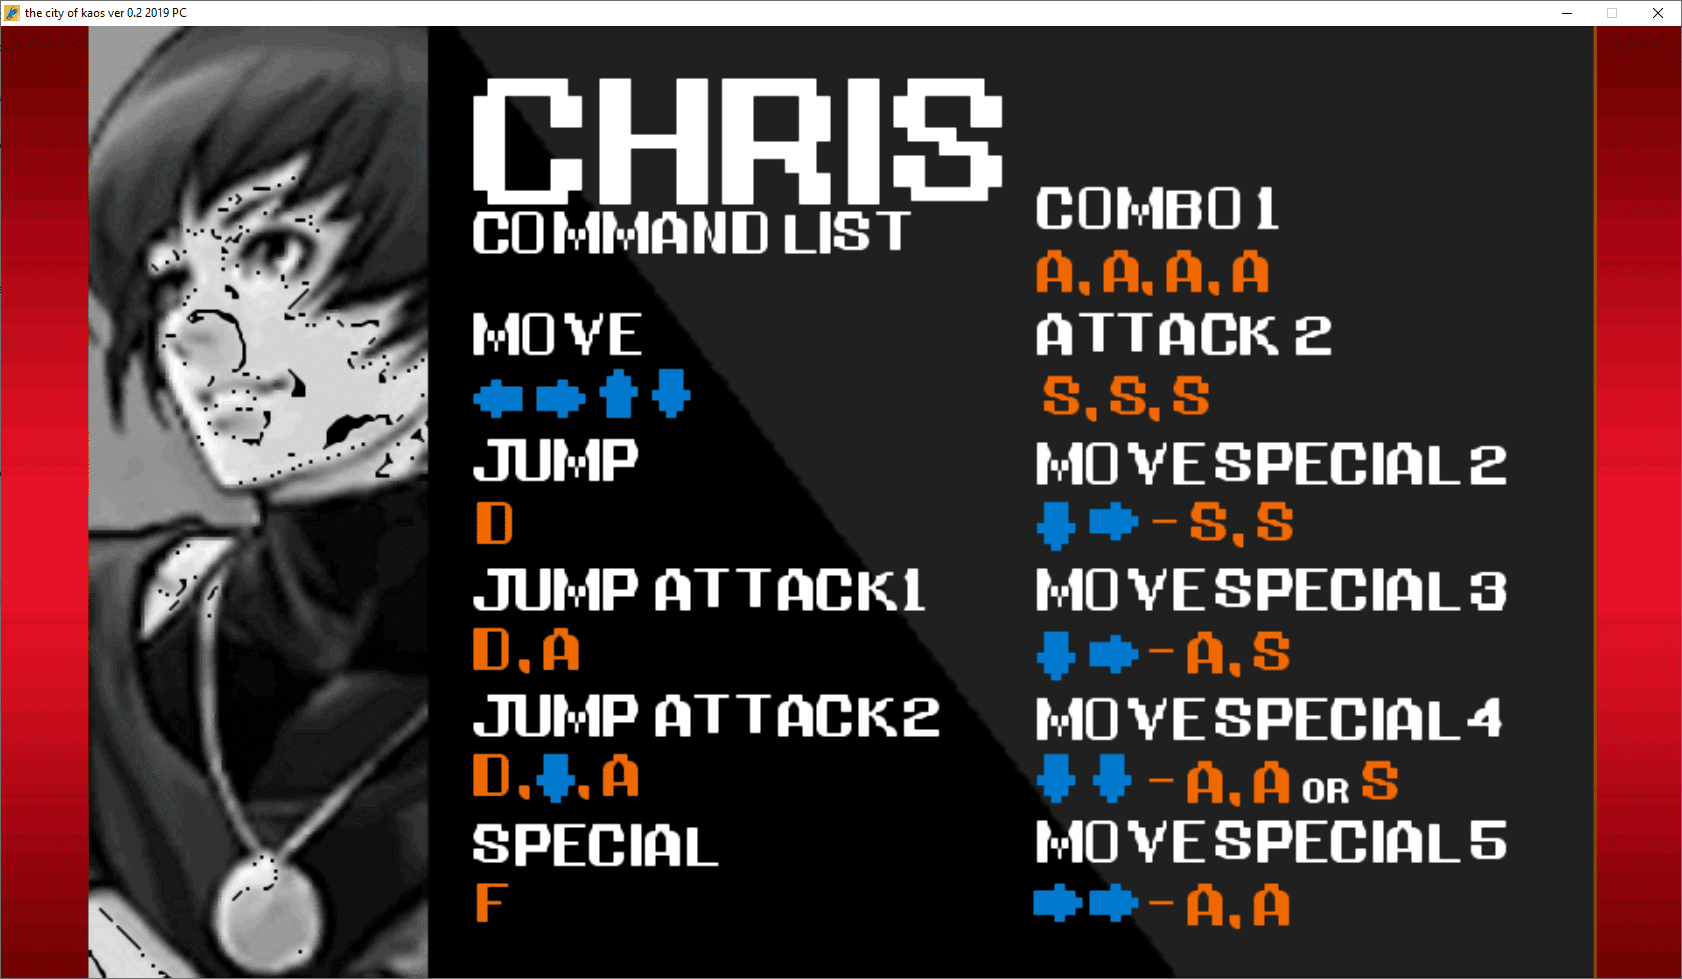 chris' command-list-city of kaos